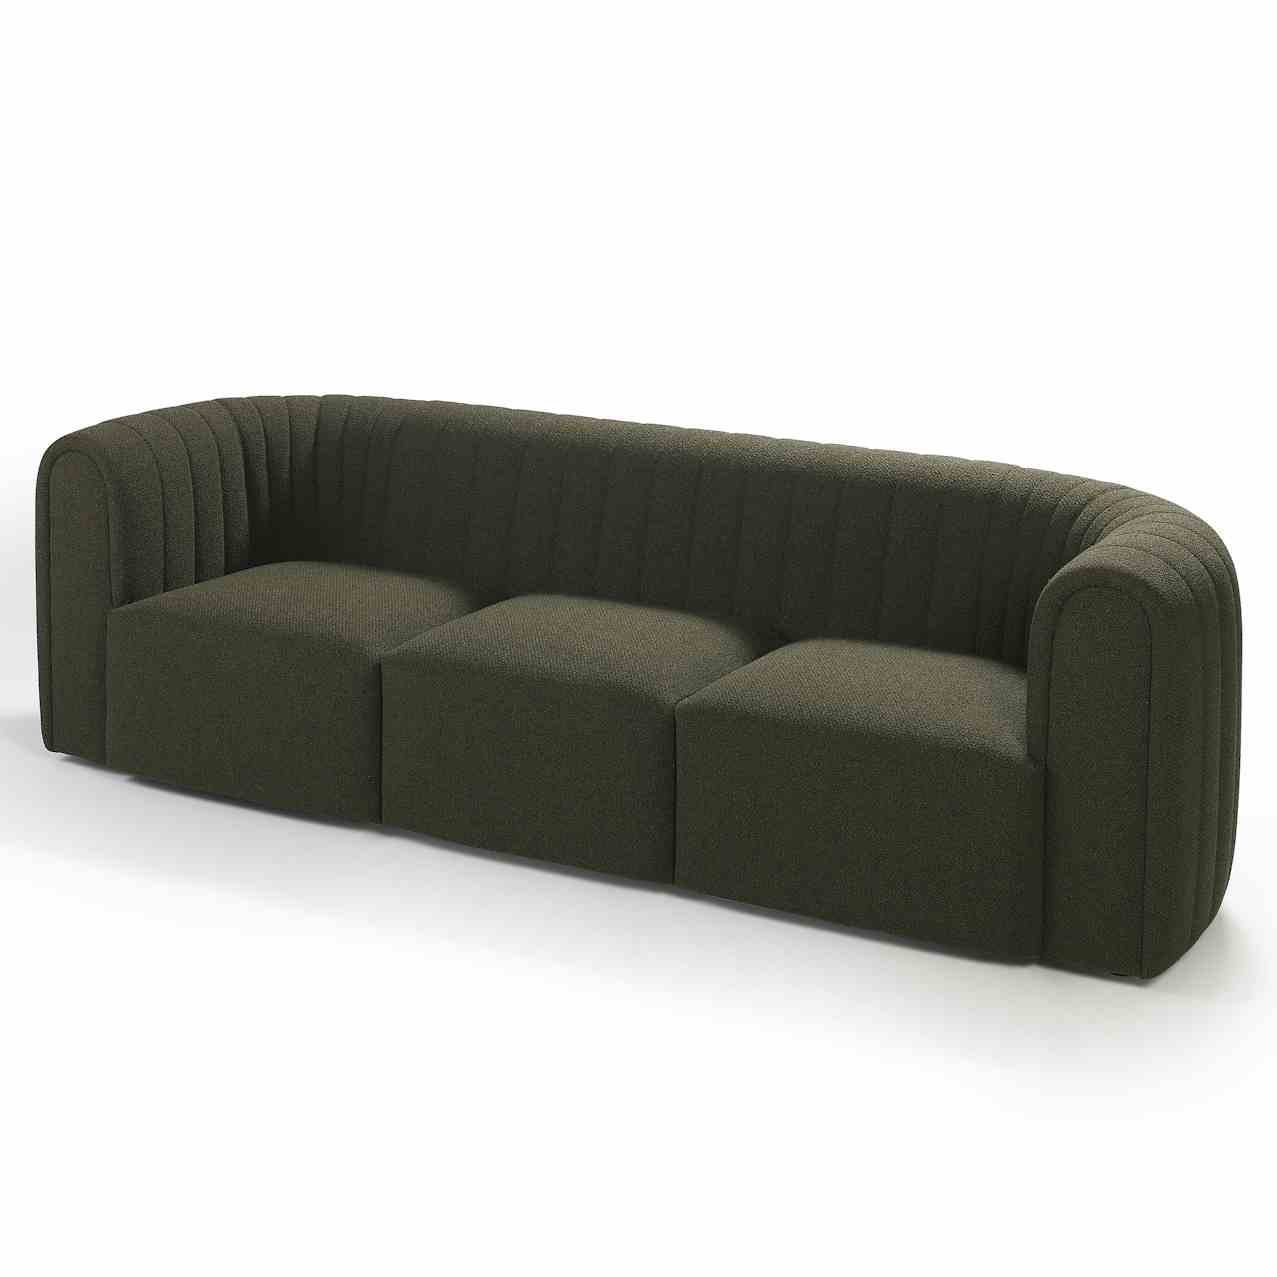 Sancal furniture core sofa thumbnail haute living